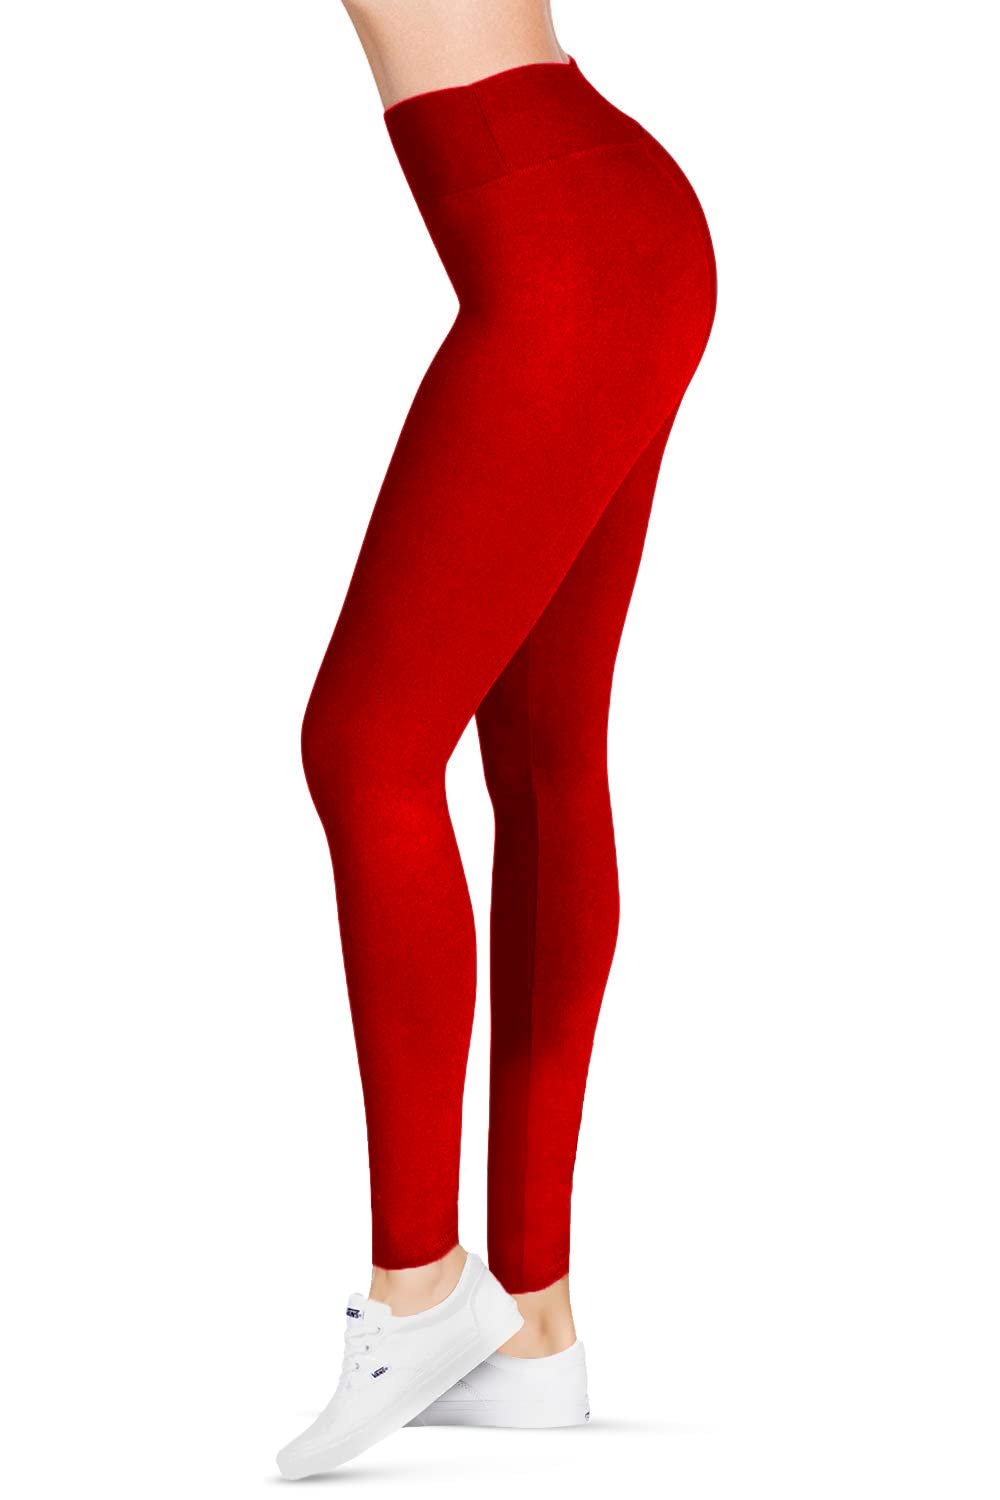 HMGYH satina high waisted leggings for women Split Hem Suit Pants (Size :  XL)